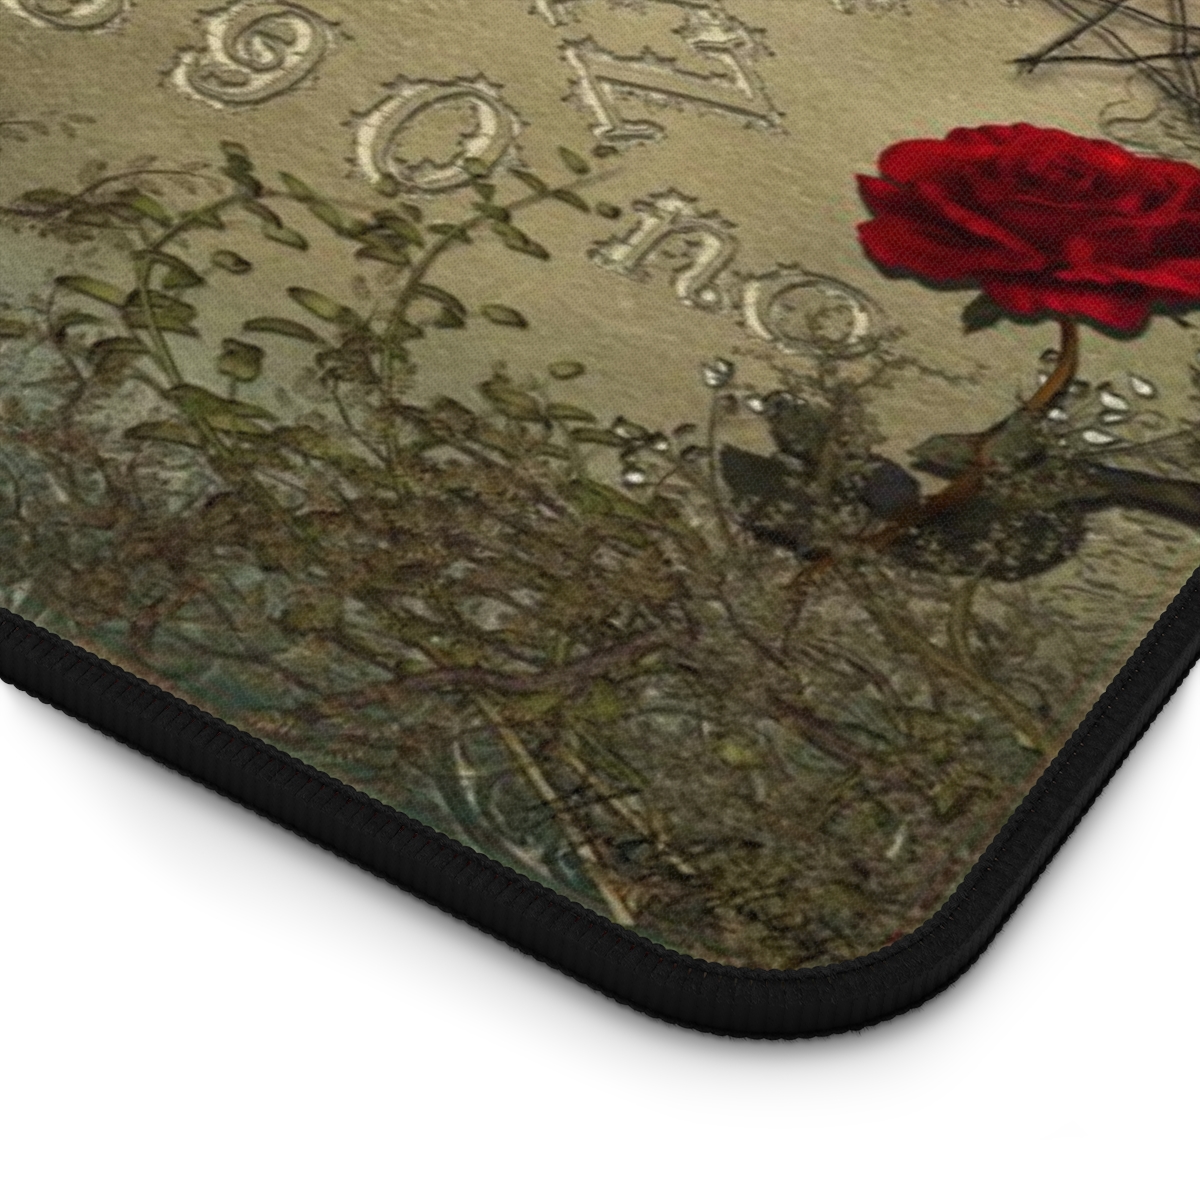 Spirit Board "Roses & Thyme" 12" x 18" Neoprene Mat product thumbnail image